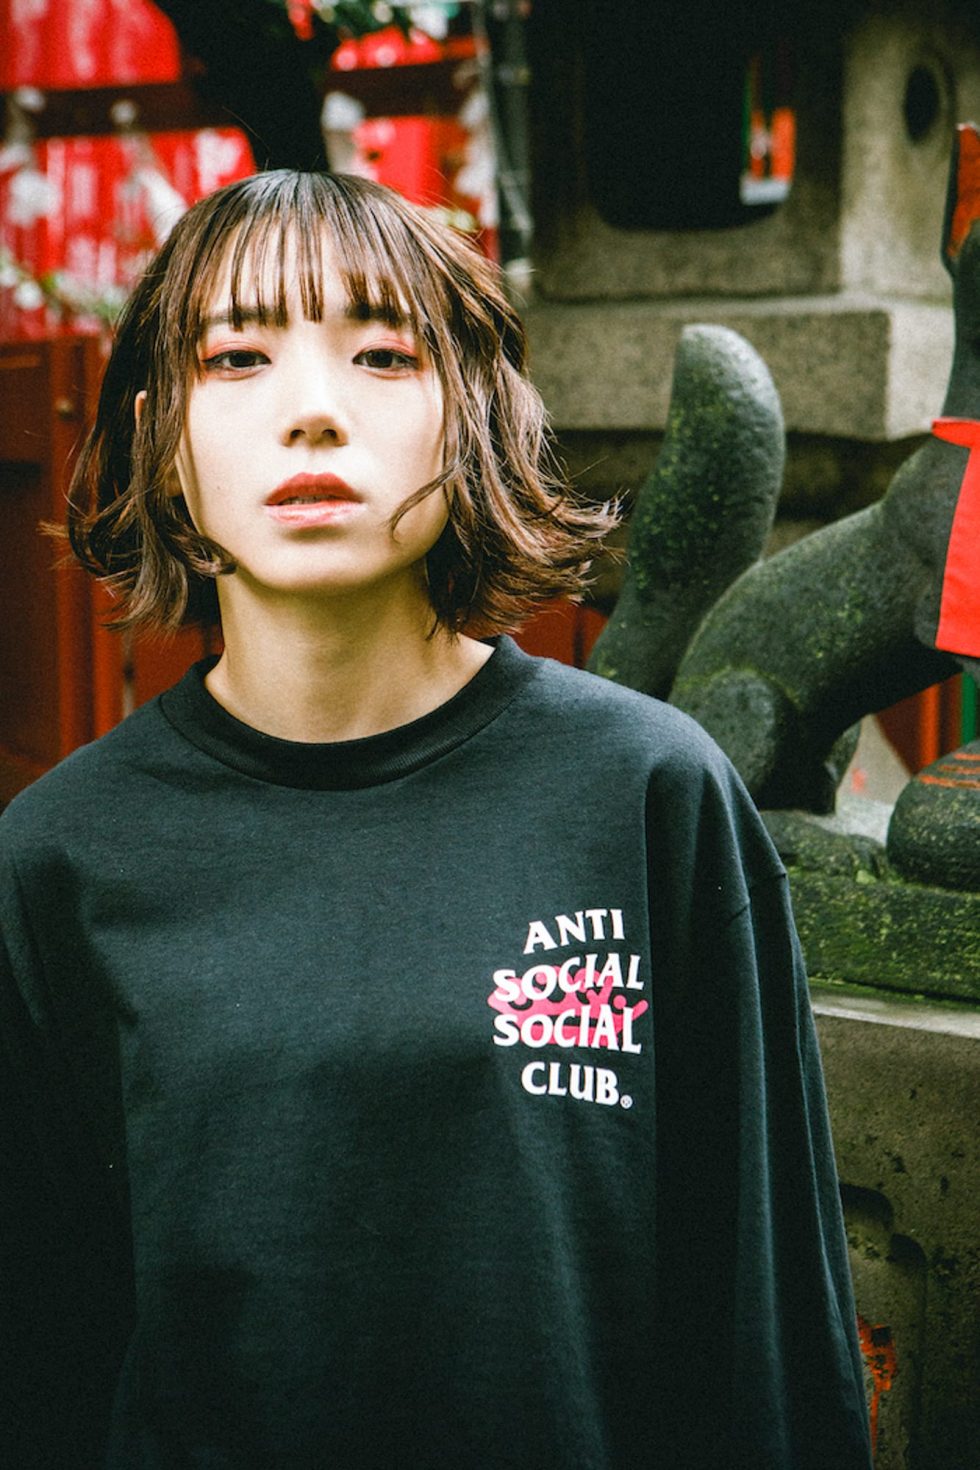 11月28日 (日本時間 11:00)発売開始 BiSH × anti social social club 日本限定 #BiSH #ASSC